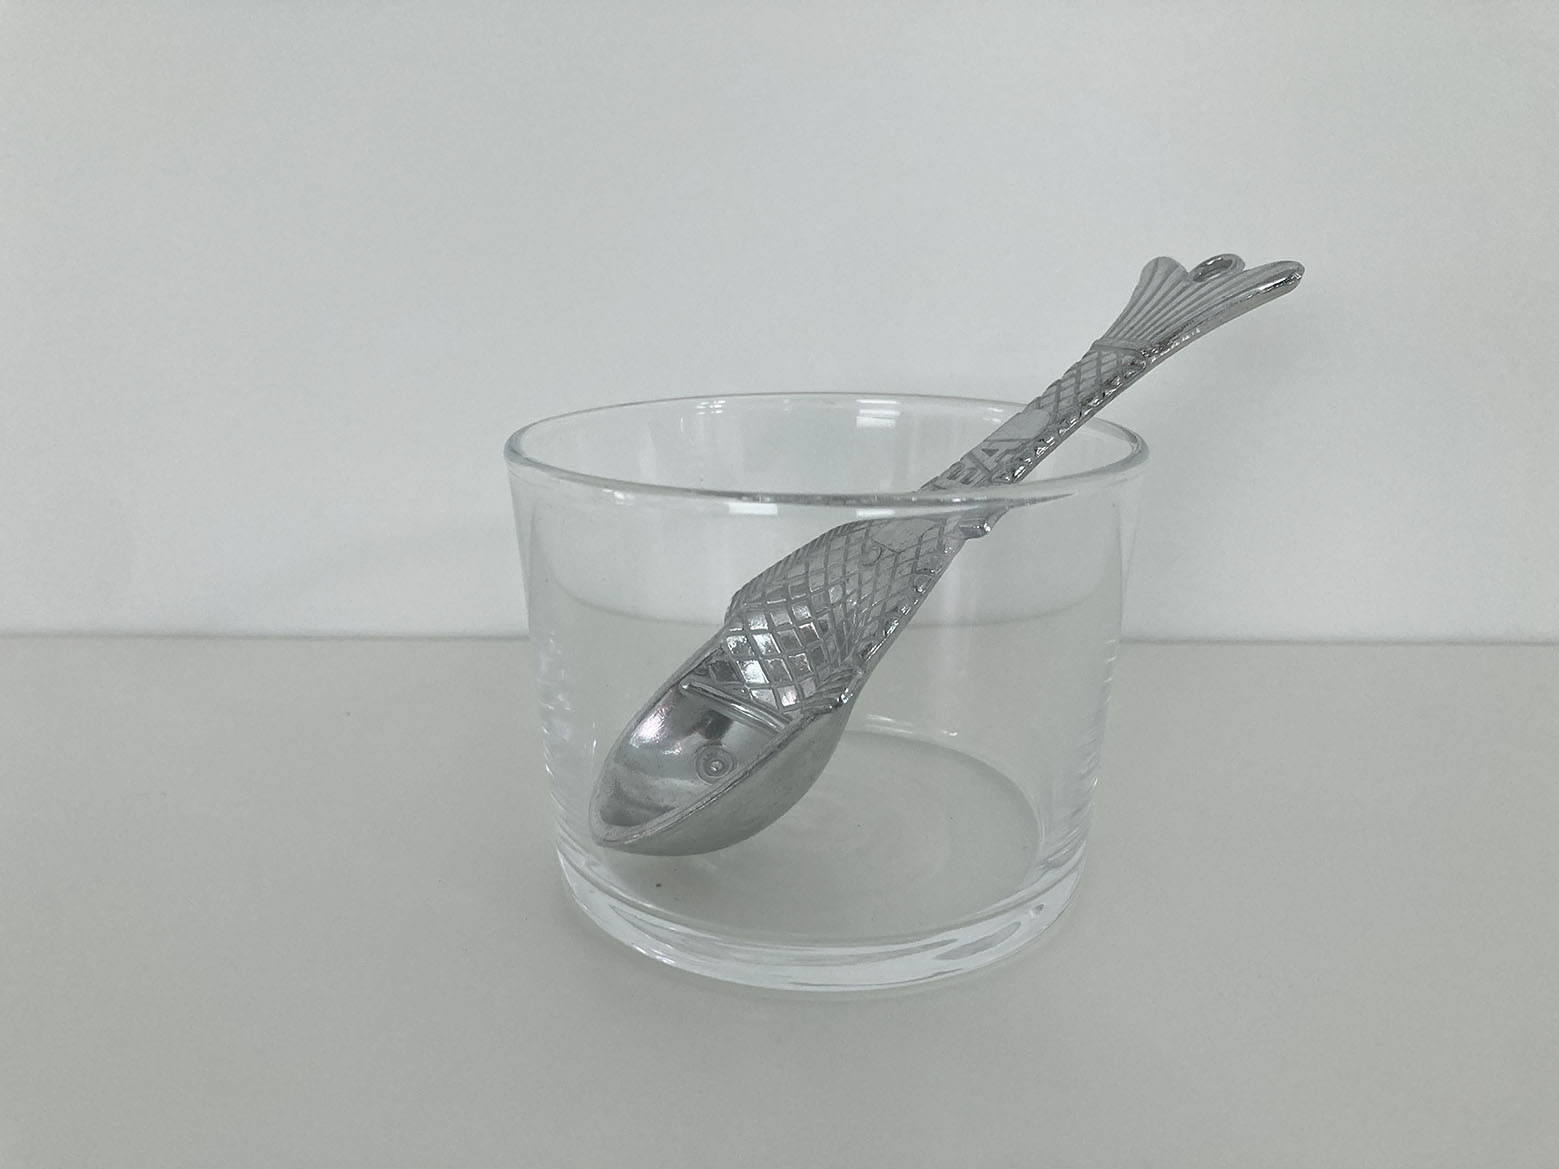 Fish spoon